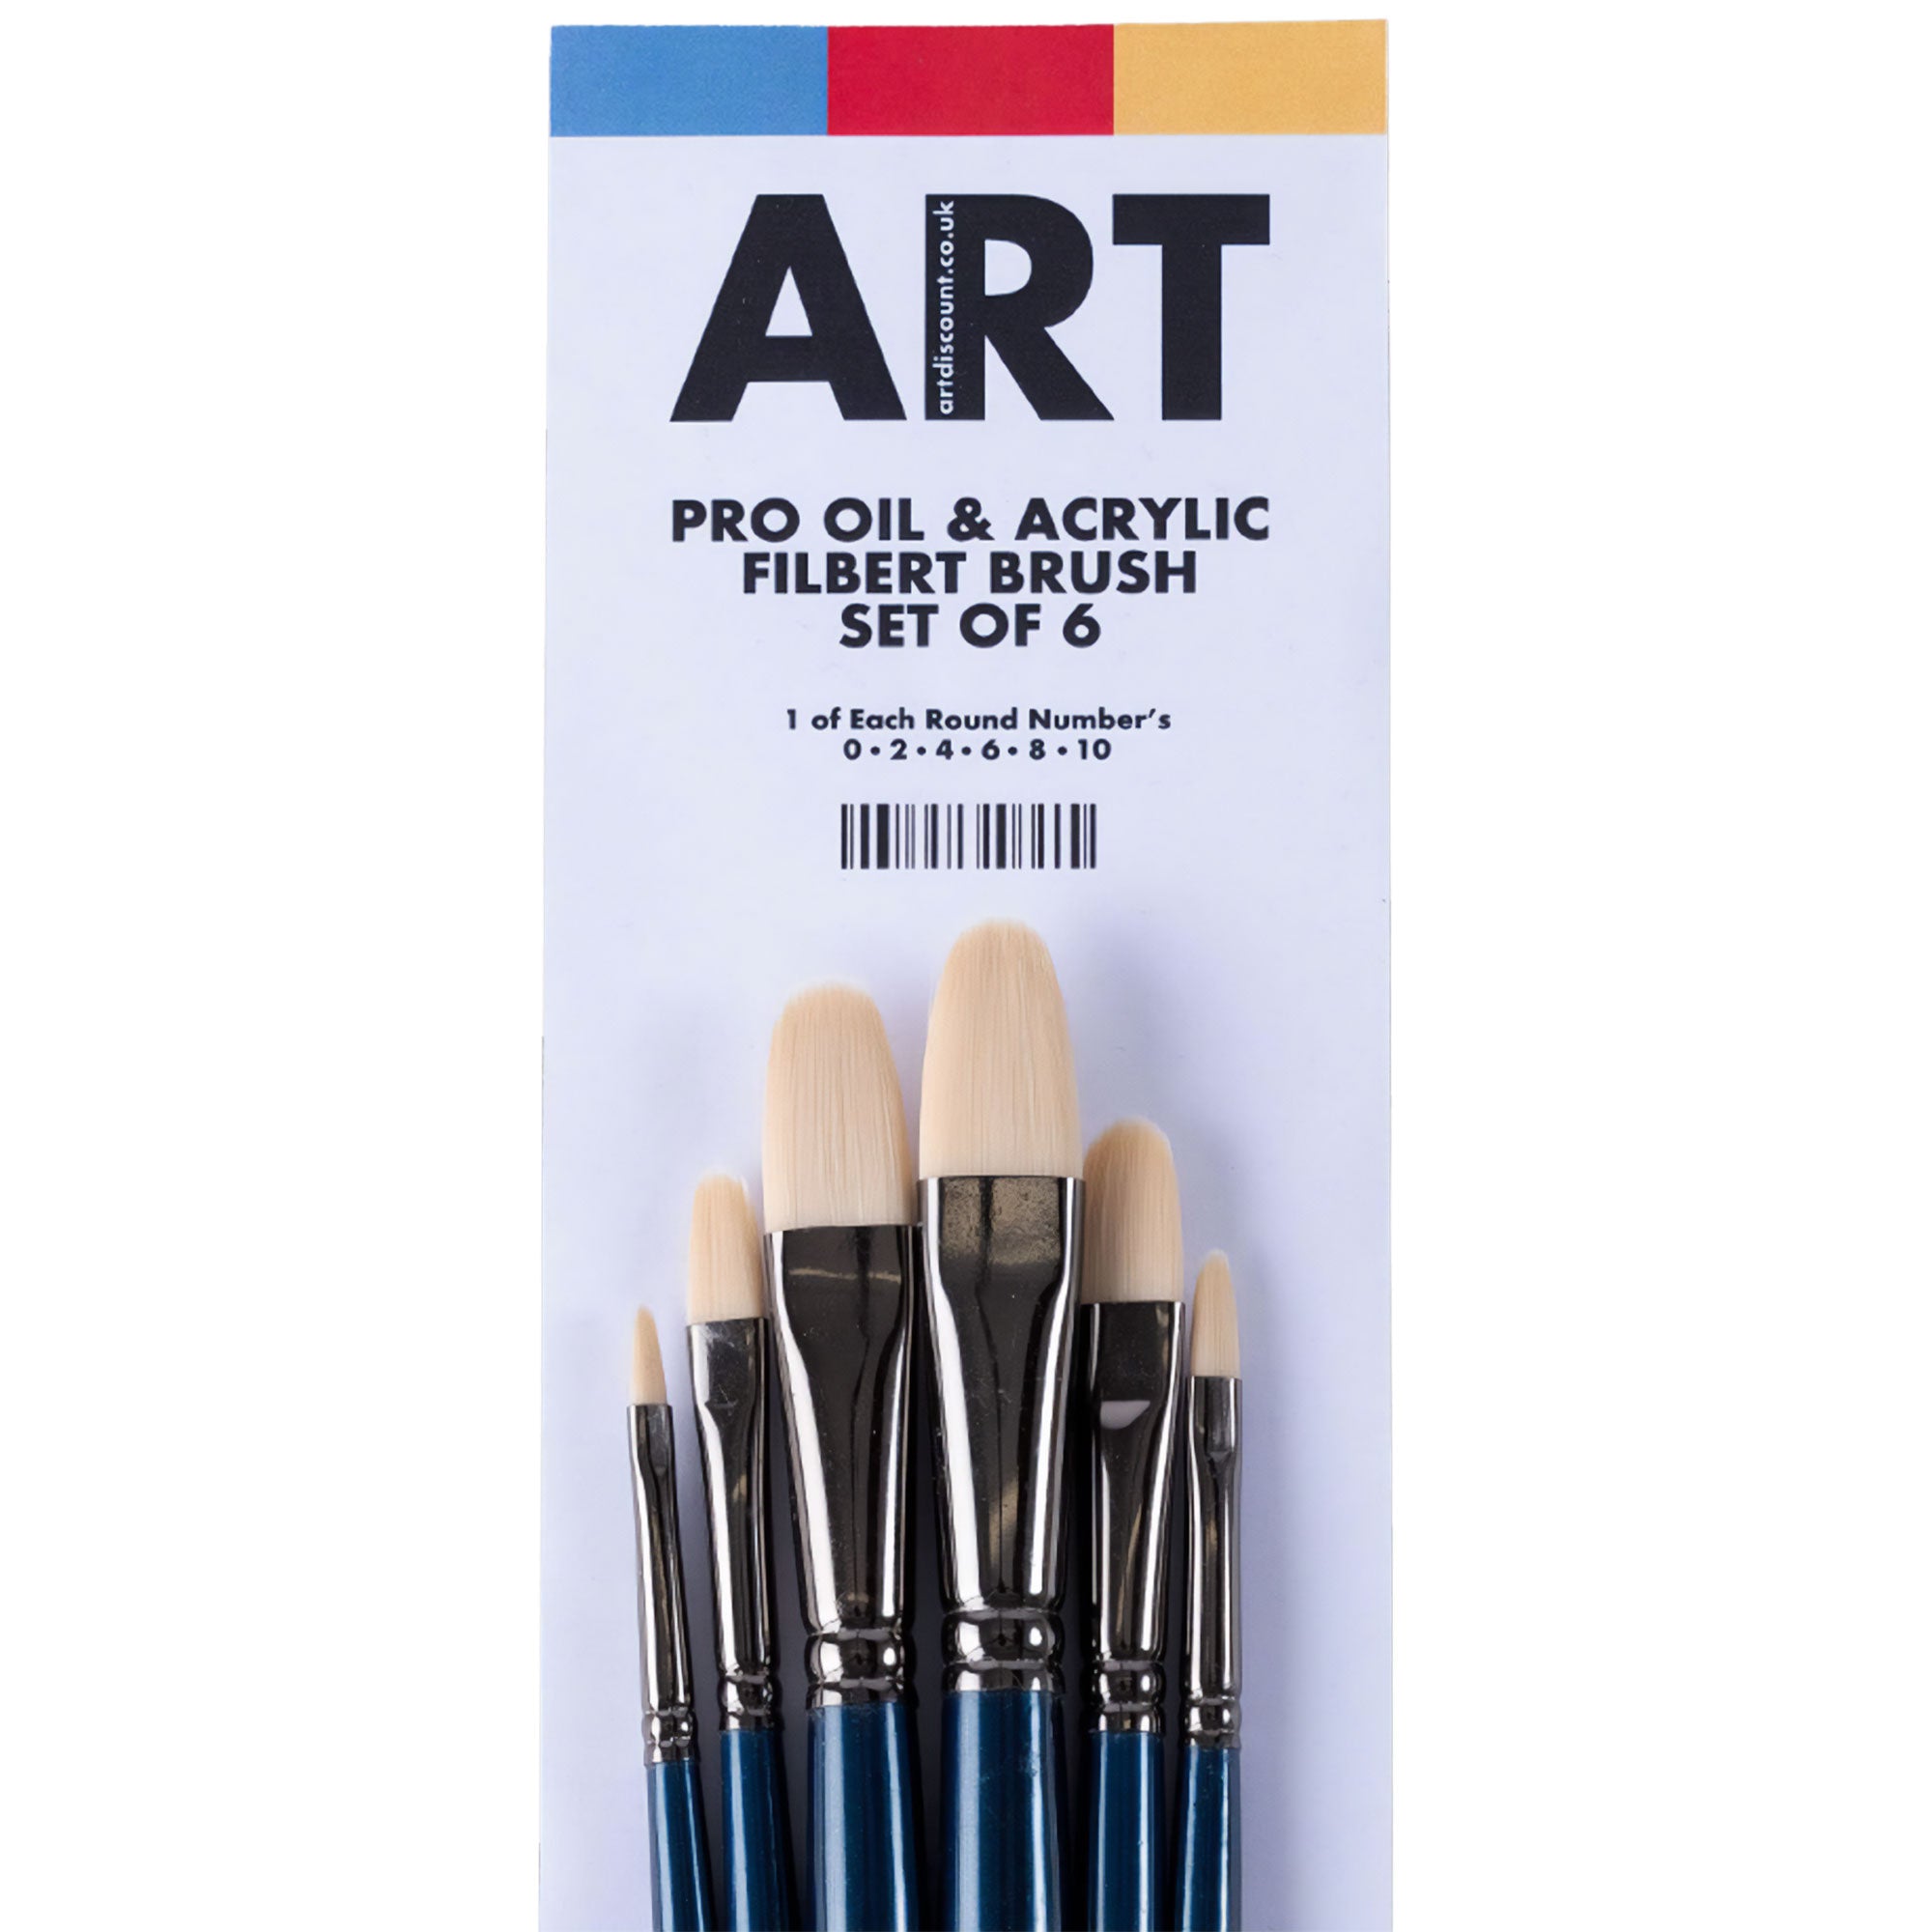 ARTdiscount Pro Oil & Acrylic Filbert Brush Set of 6